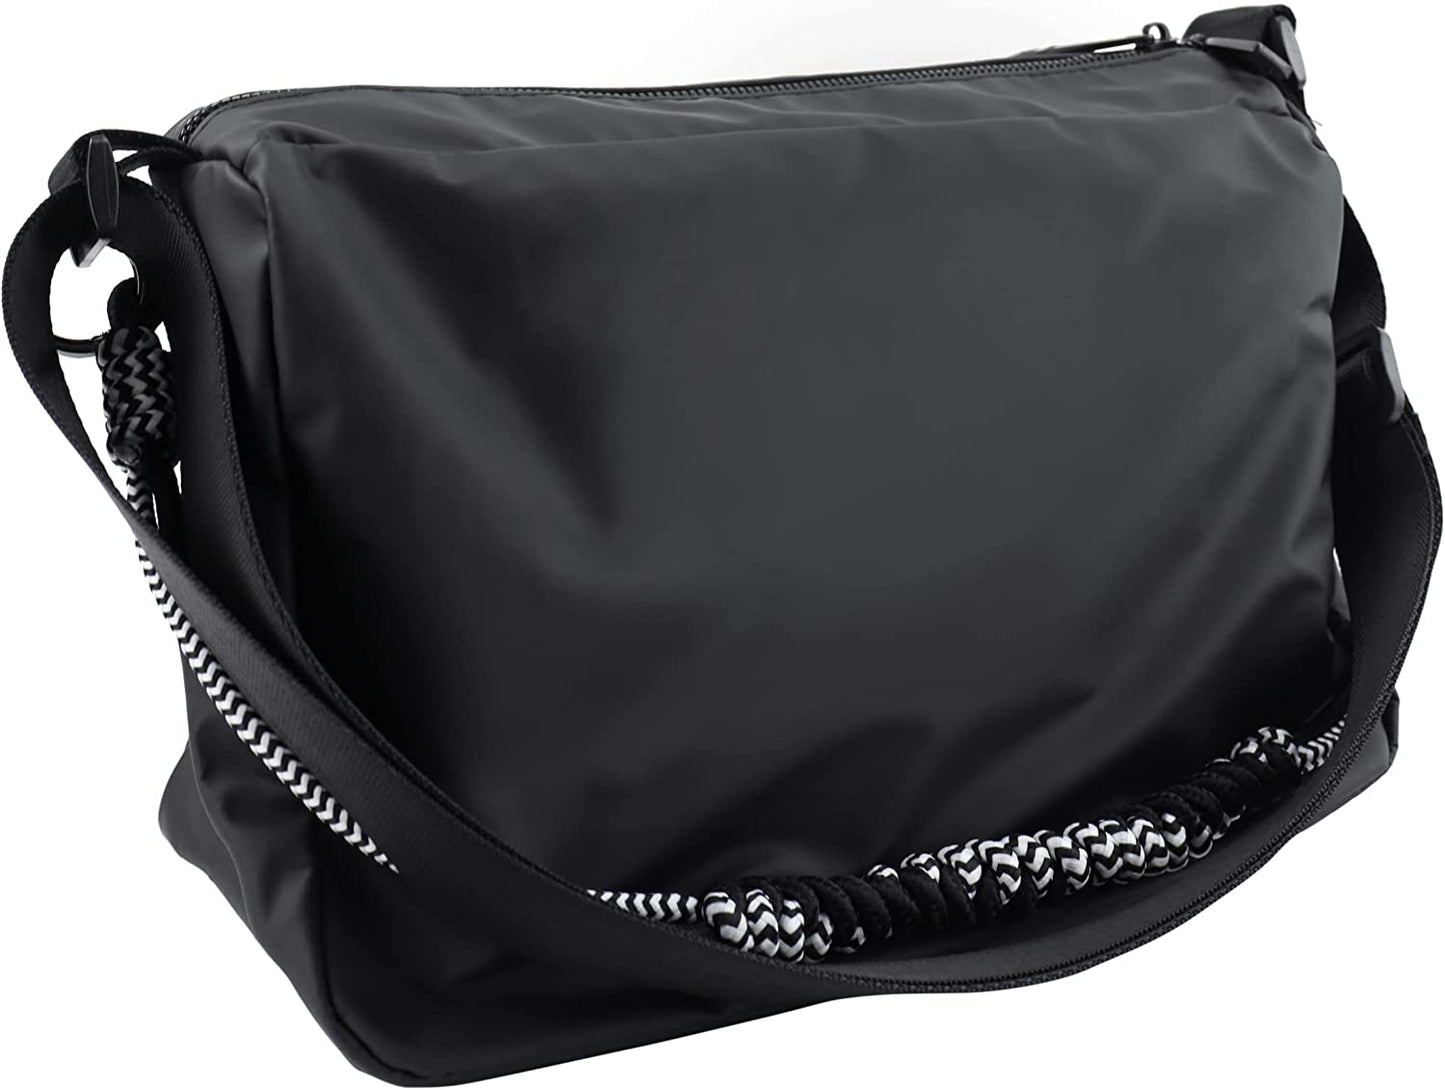 Messenger Bag for Men Women Crossbody Satchel Shoulder Bags for School Work Office with Adjustable Strap